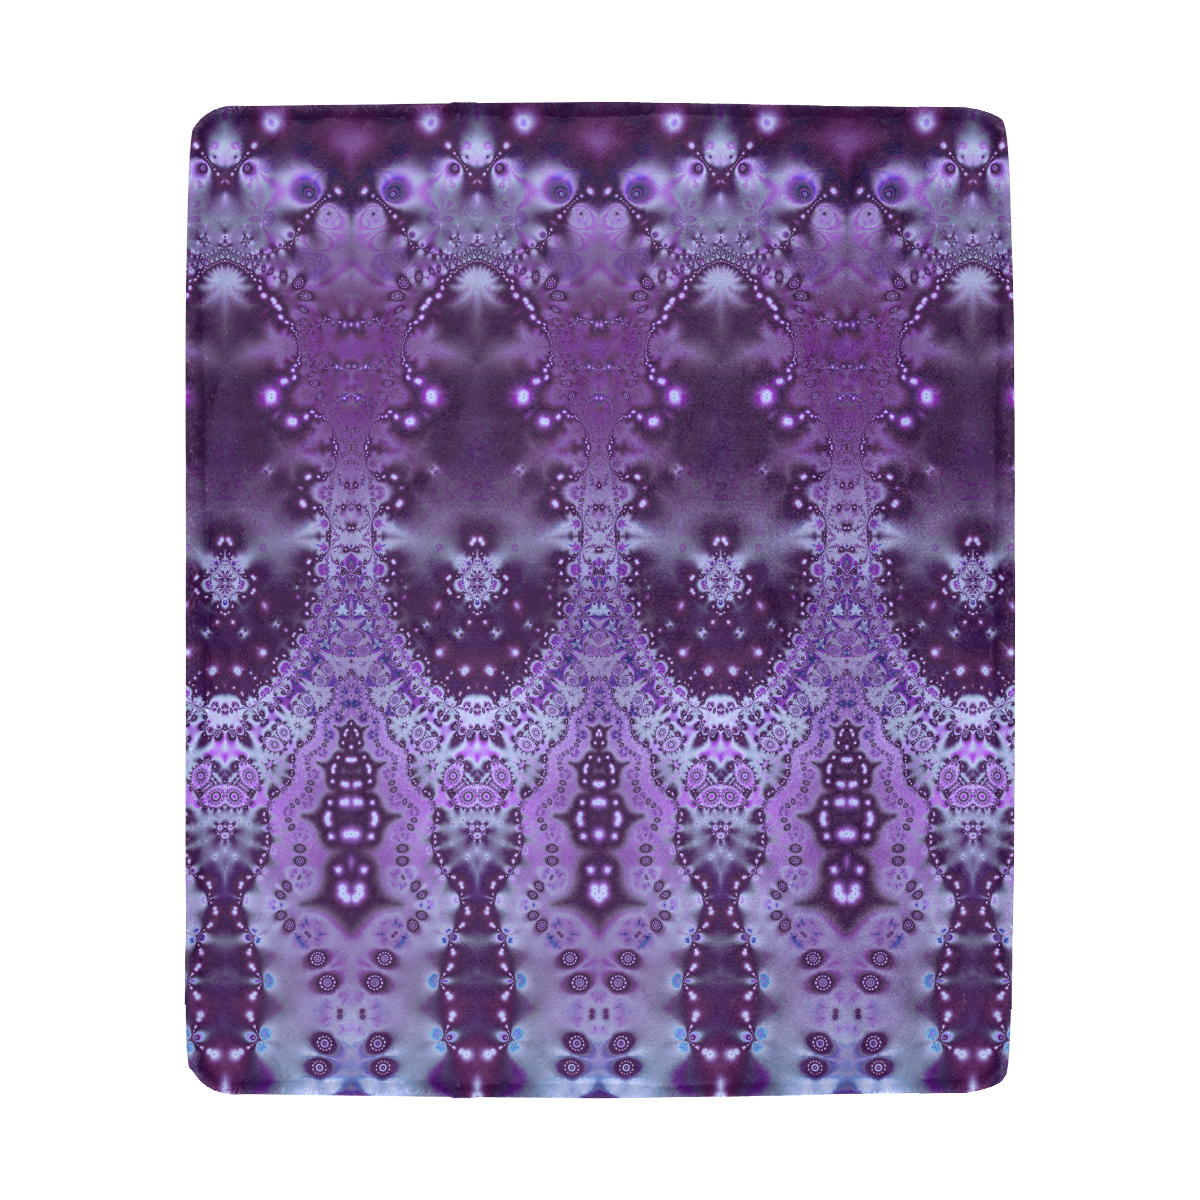 Delicate Lavender Lace Ultra-Soft Micro Fleece Blanket 50"x60"